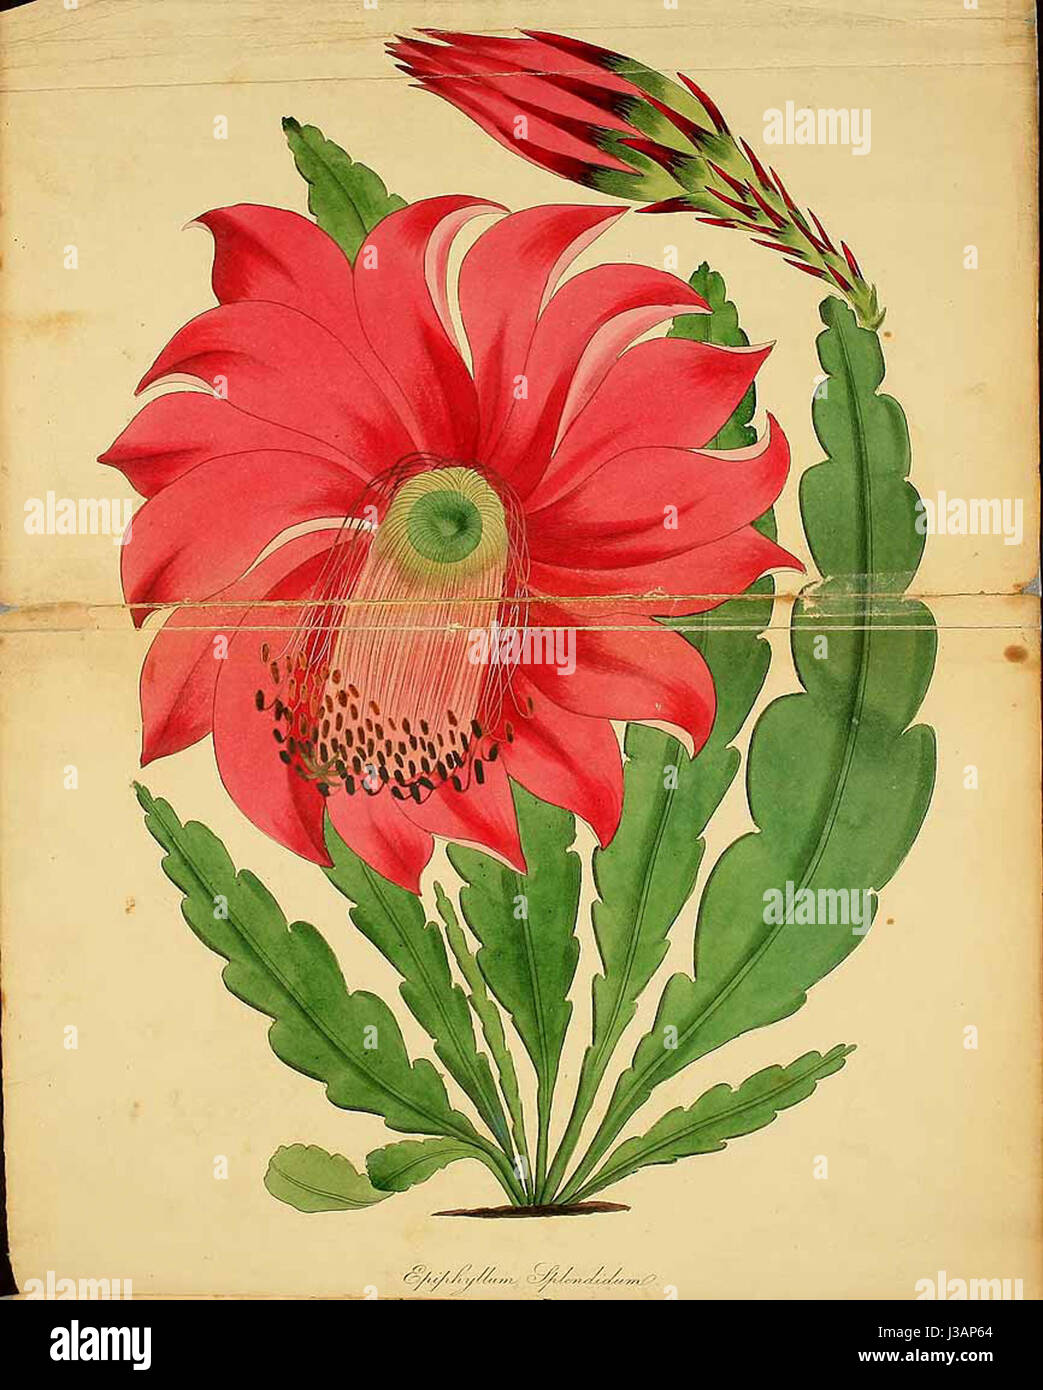 Epiphyllum splendidum 188820 Stock Photo